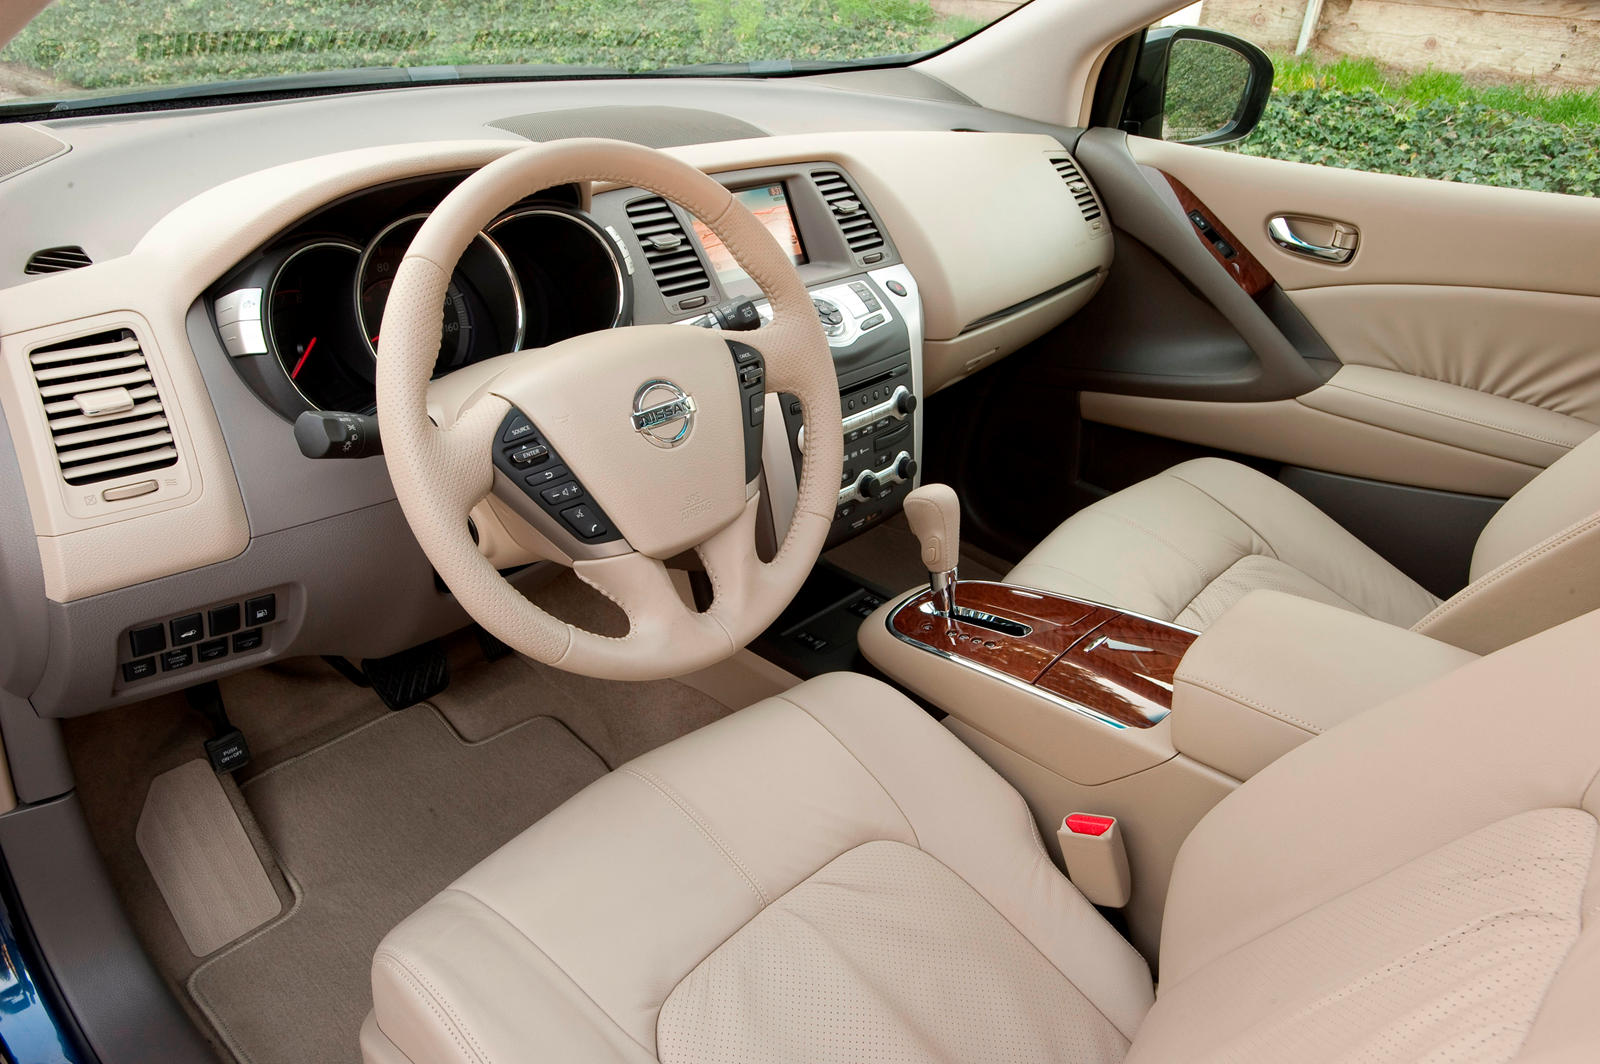 Nissan Murano 2009 interior - Car Body Design